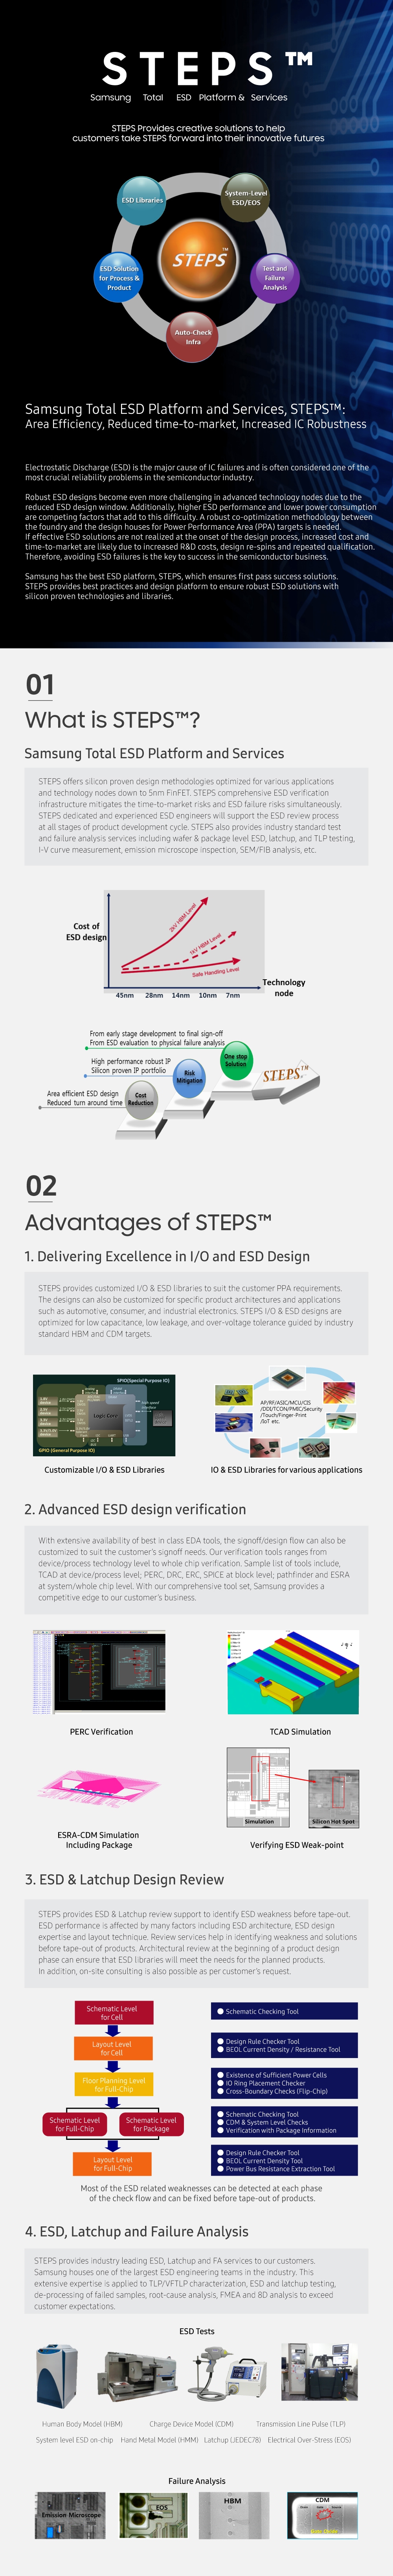 steps-samsung-total-esd-platform-services